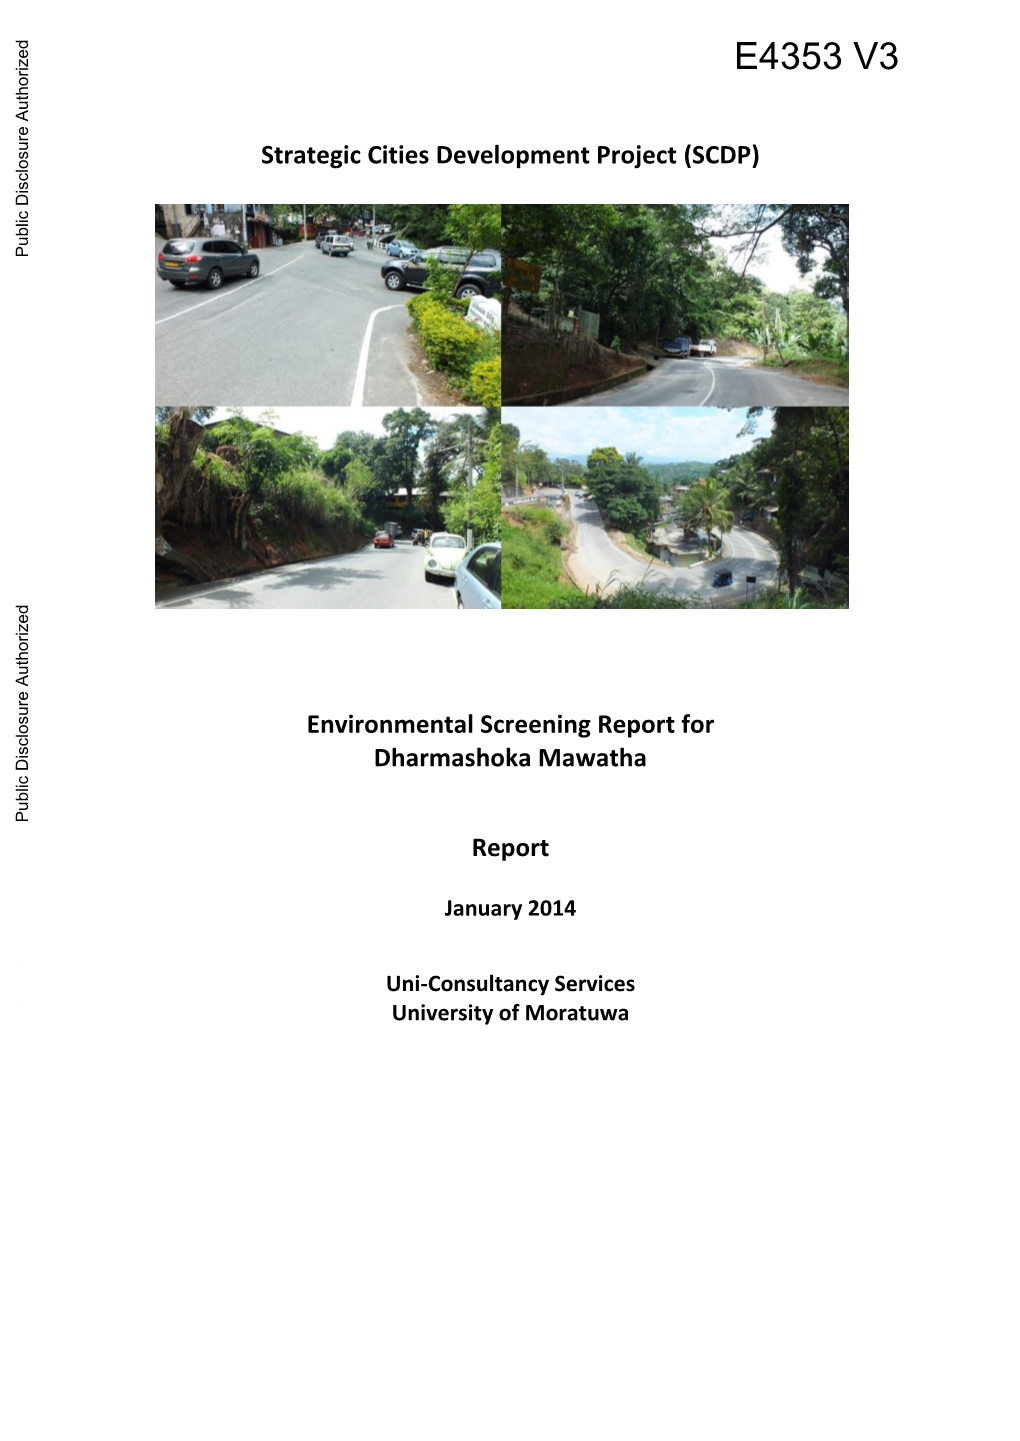 Environmental Screening Report for Dharmashoka Mawatha